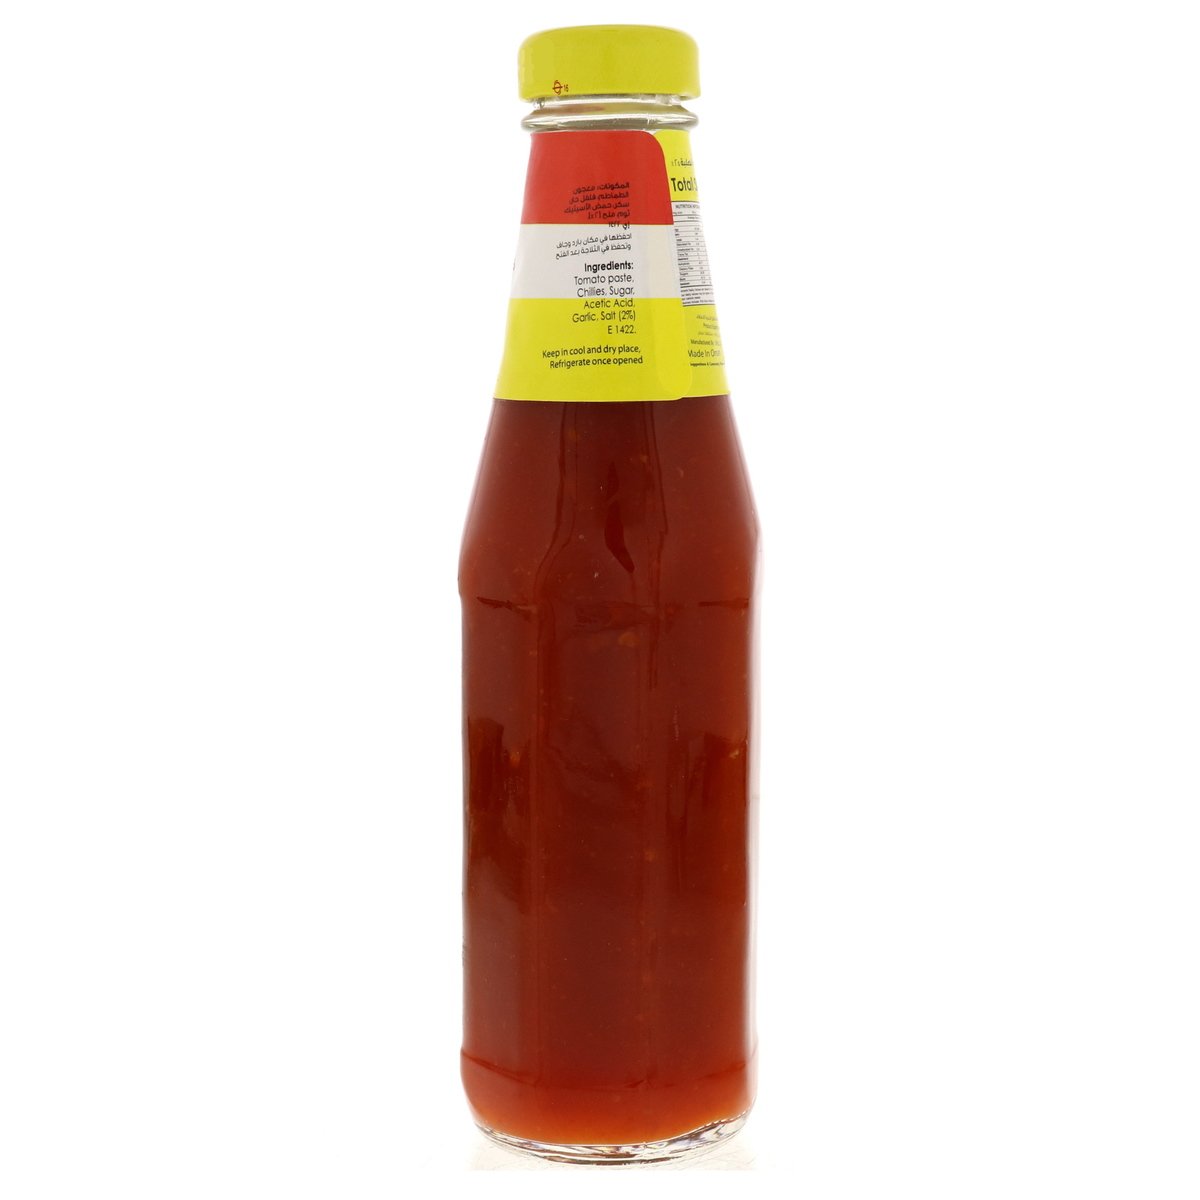 LuLu Chilly Garlic Ketchup 325 g